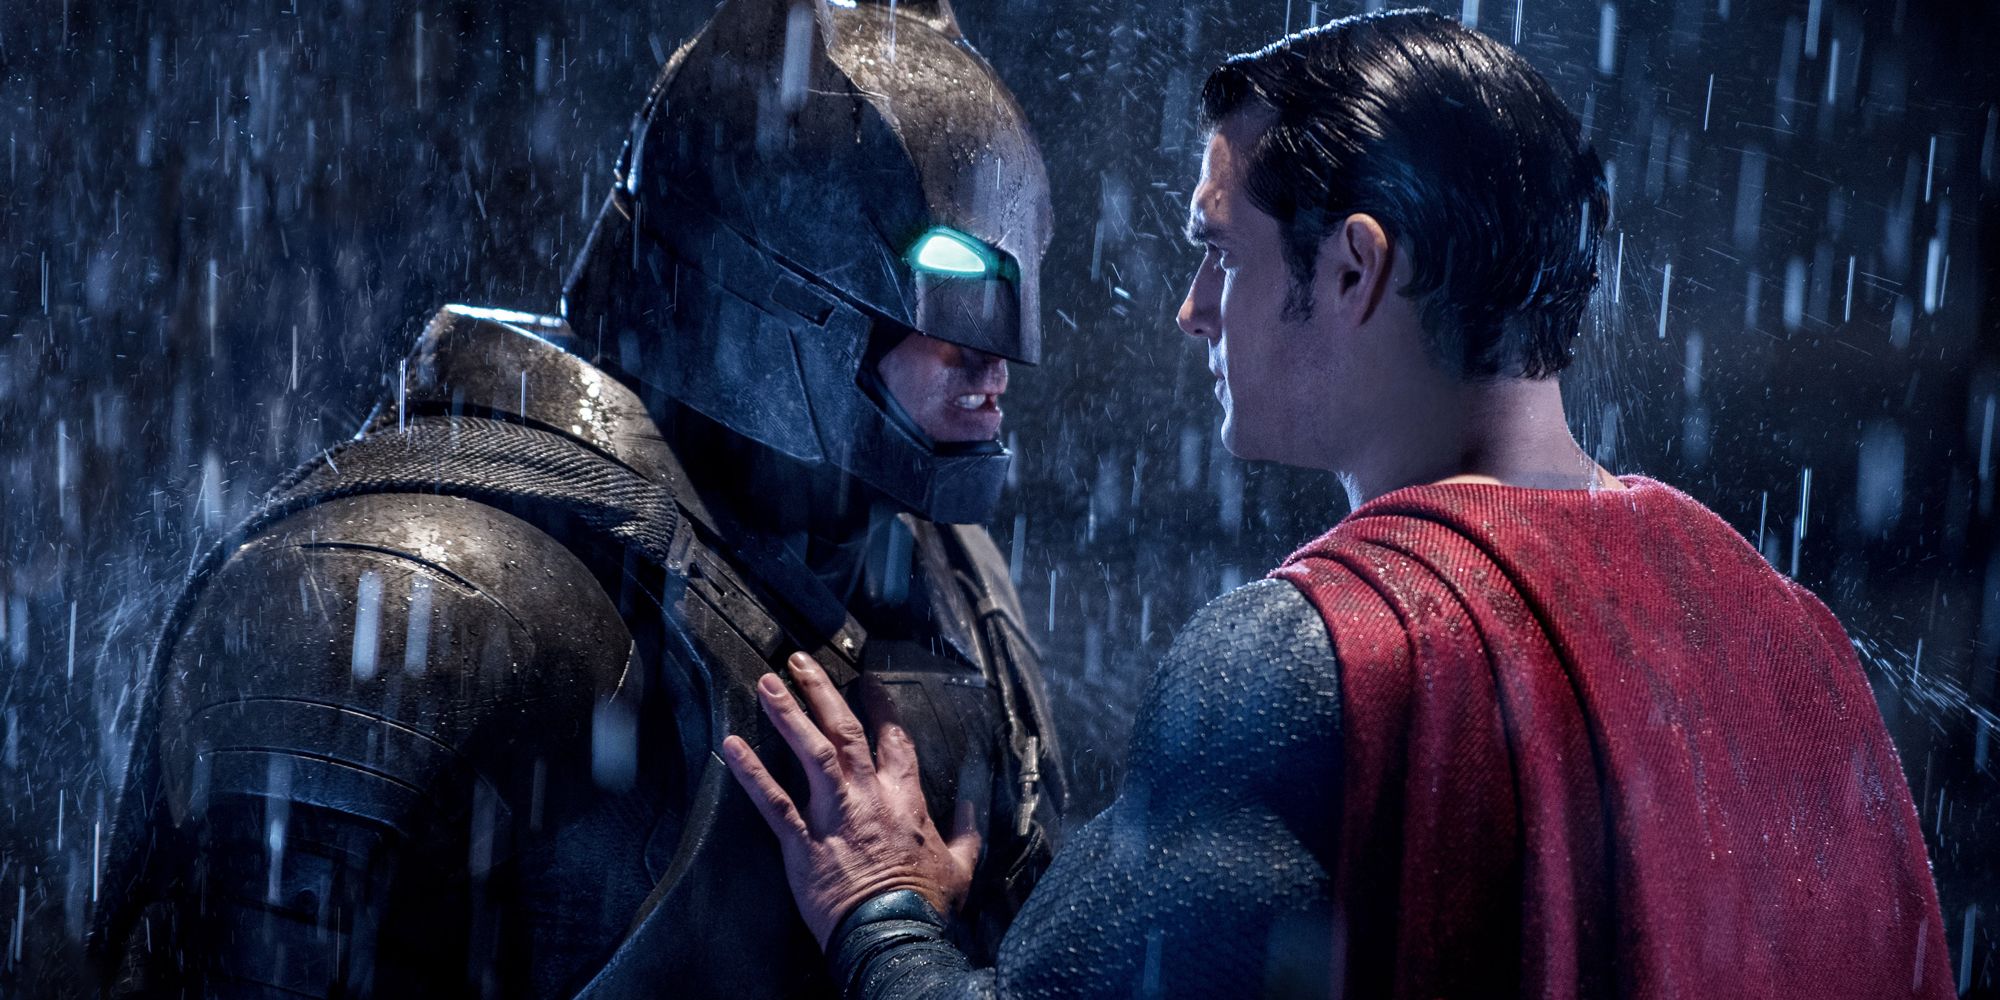 DCEU Batman Vs Superman, Batman In His Armored Suit Stares Down Superman As The Rain Falls